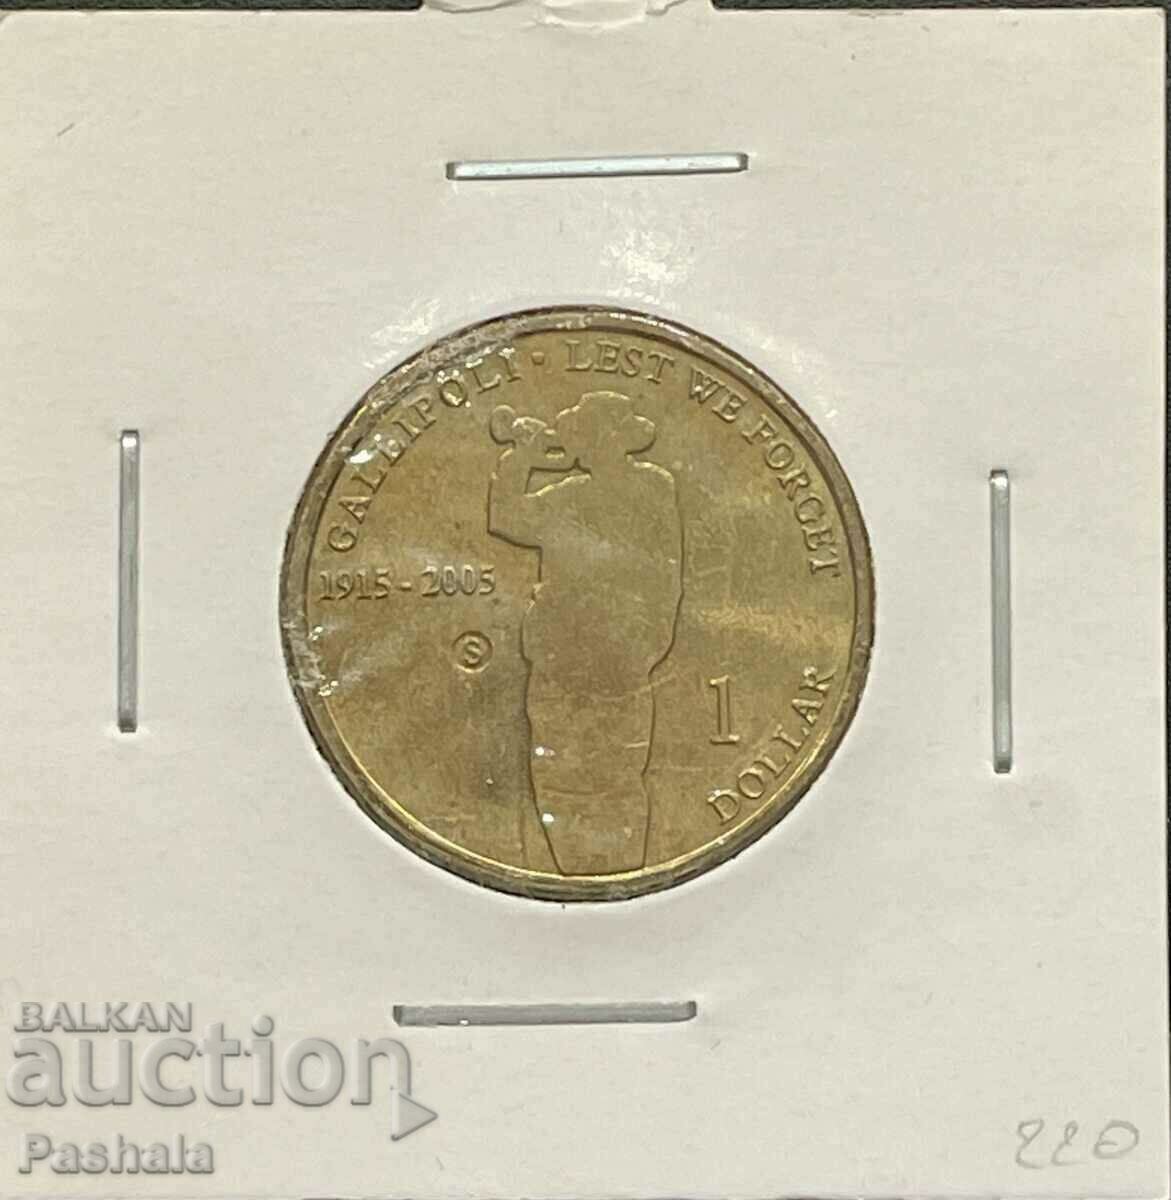 Australia 1 USD 2005